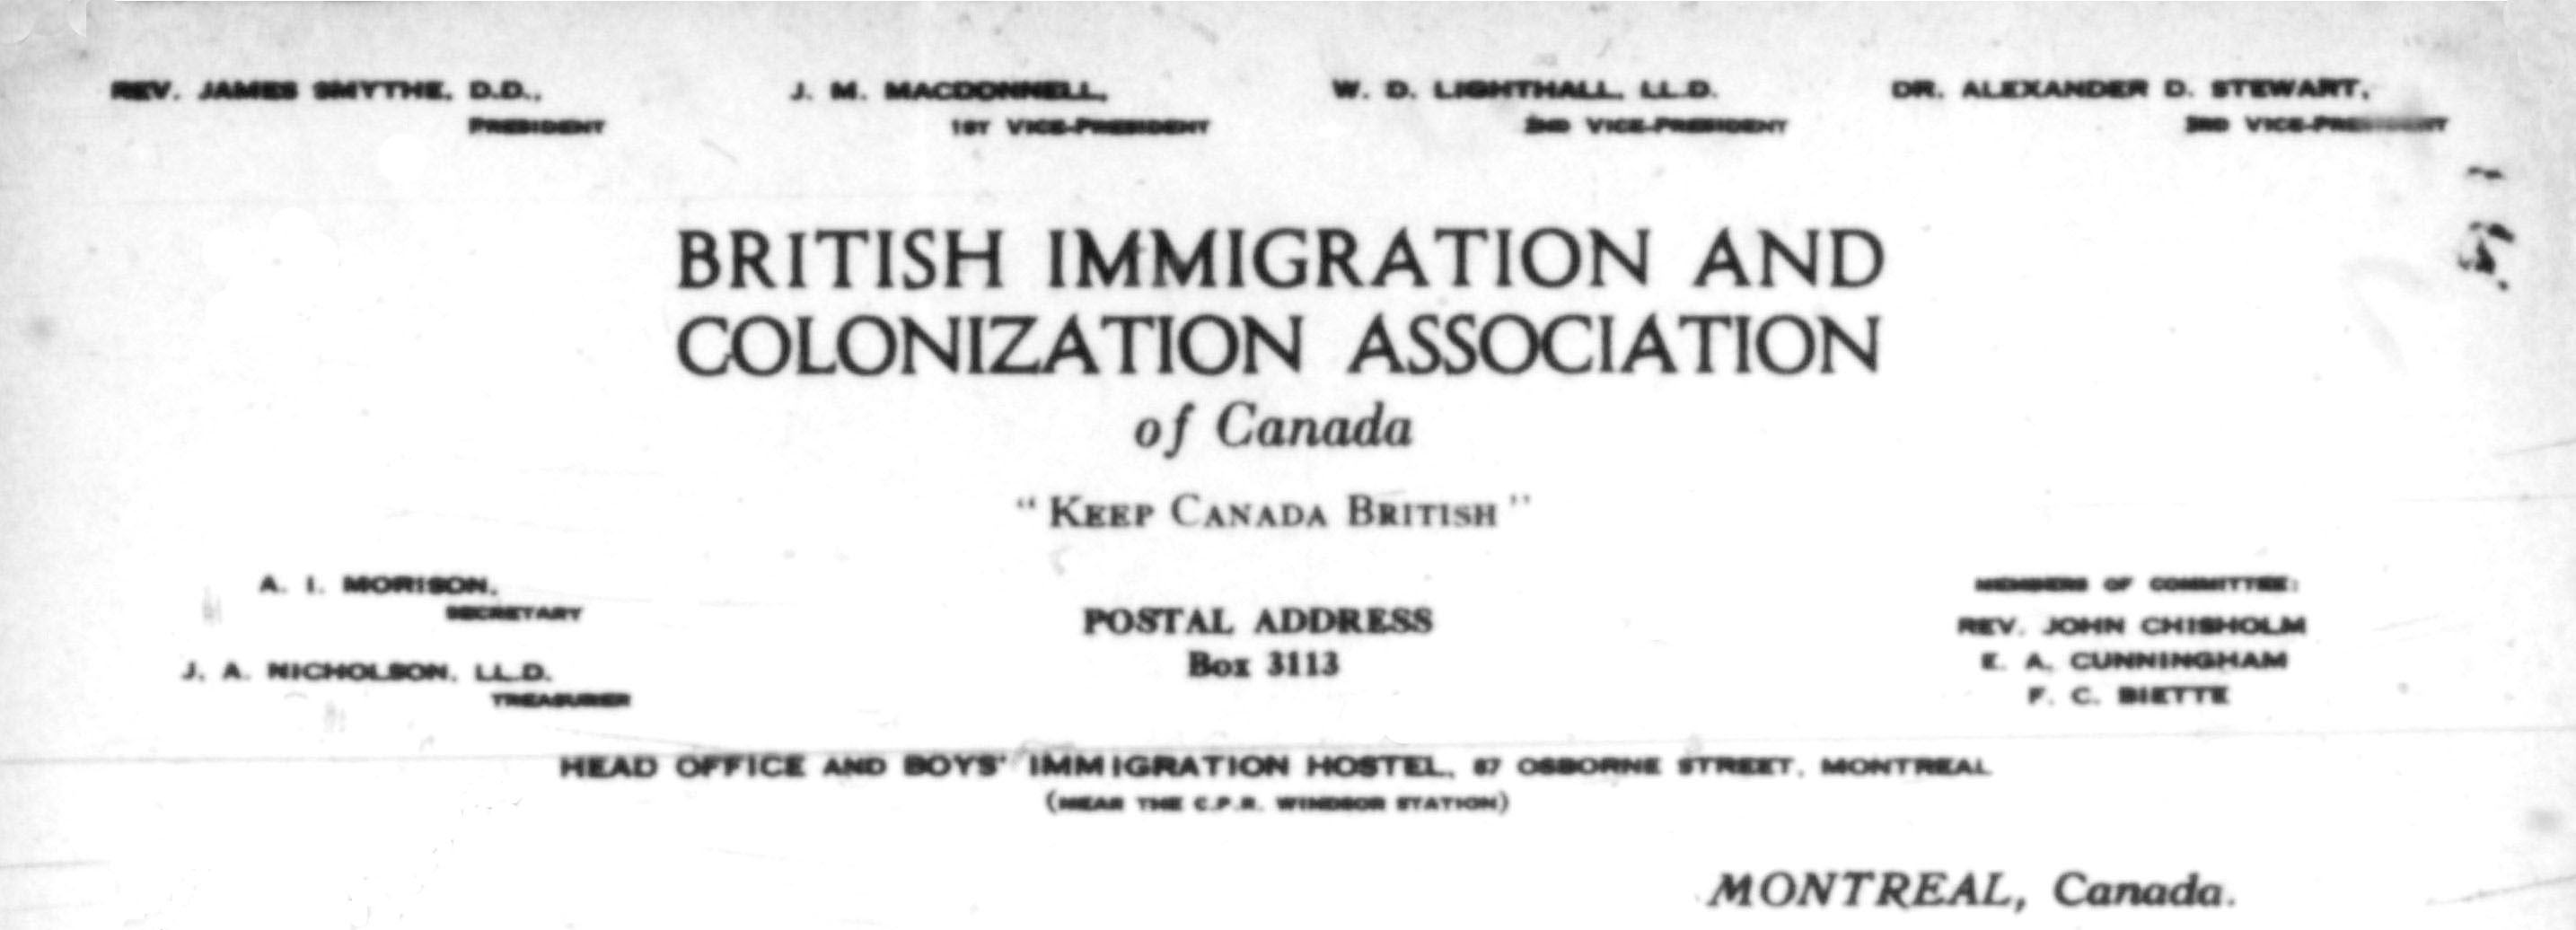 British Immigration and Colonization Association Letterhead